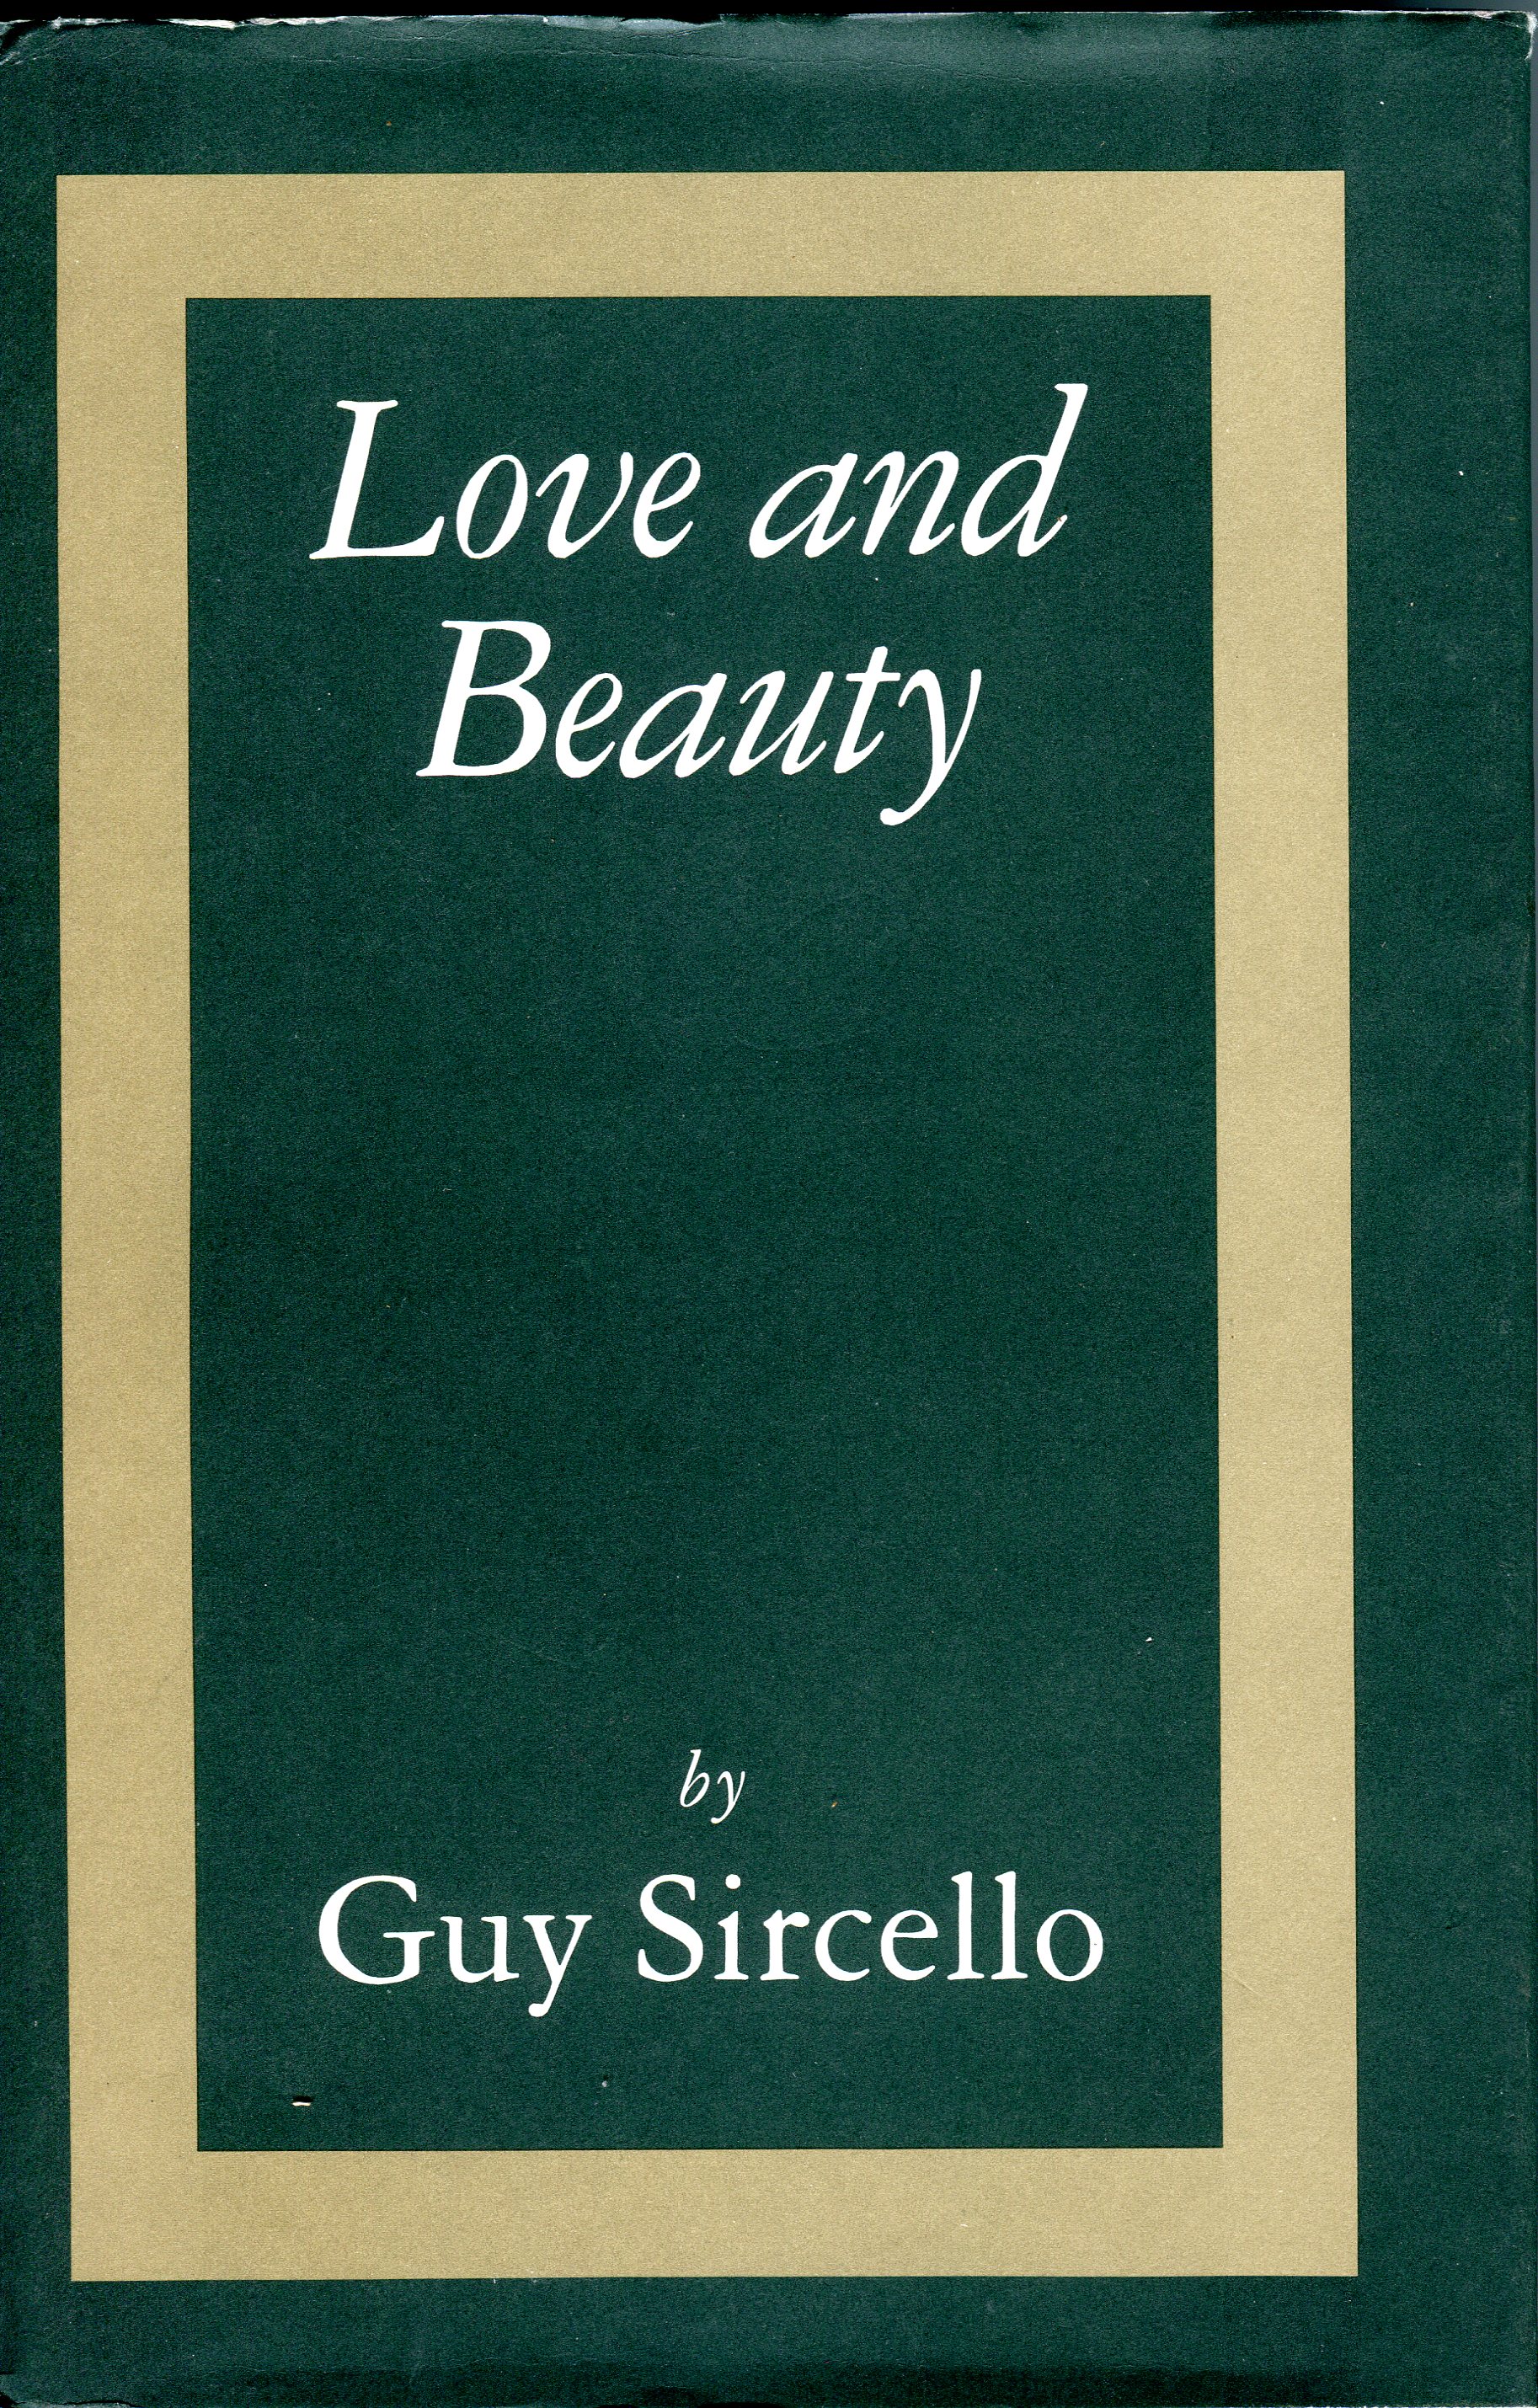 Guy Sircello001